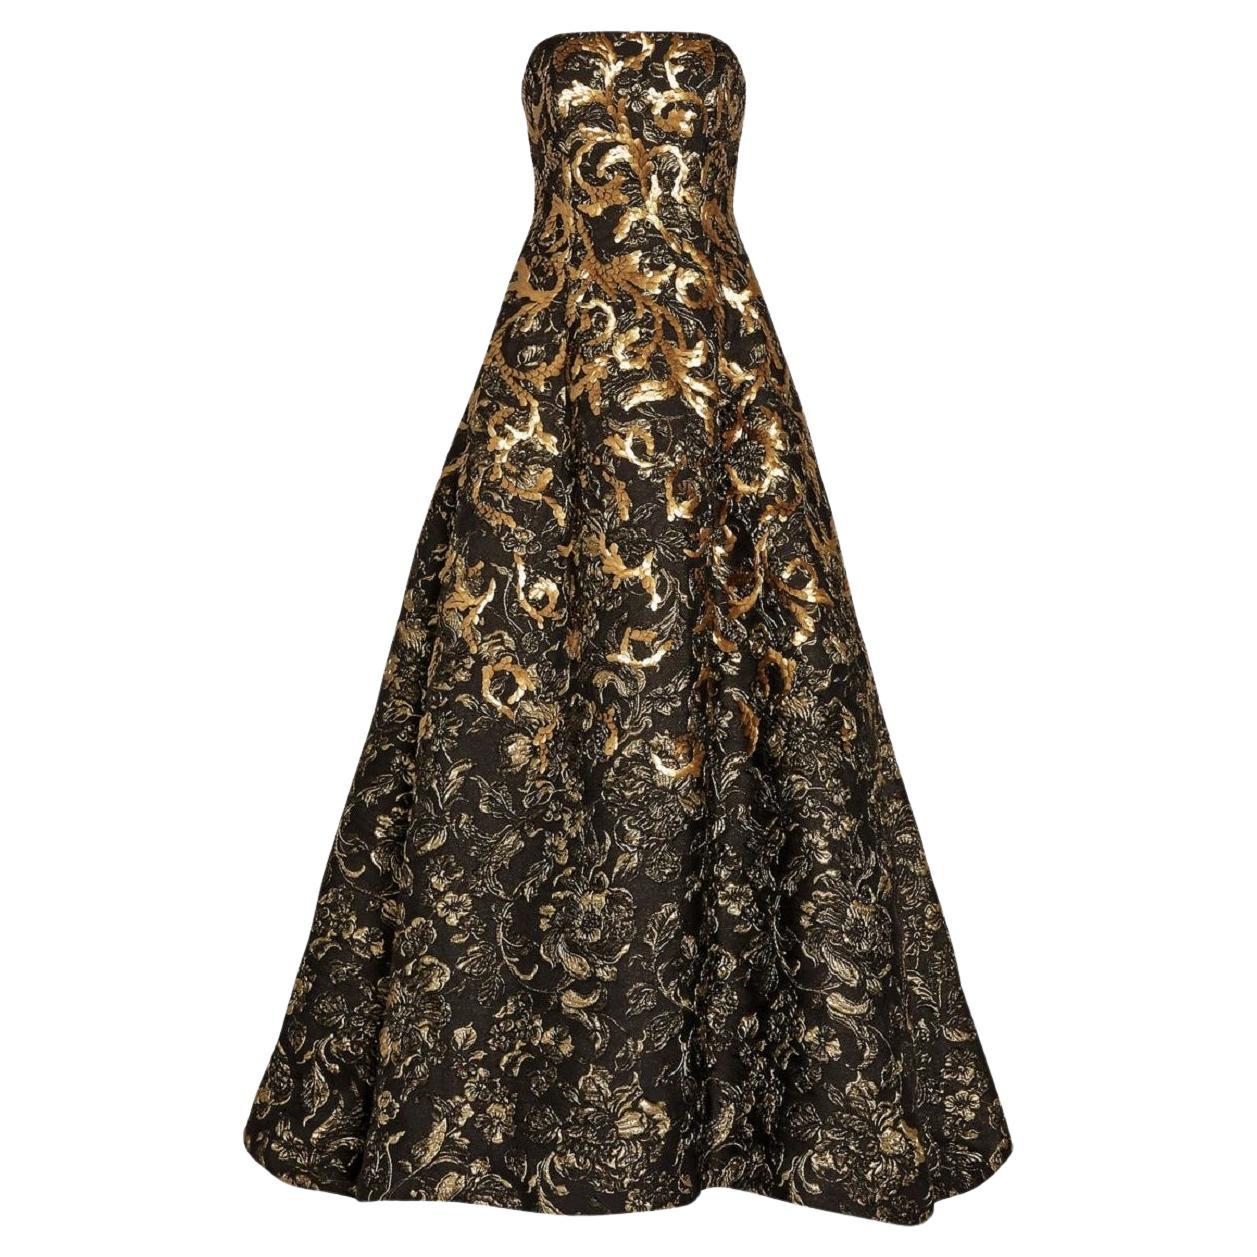 Oscar de la Renta H/W 2014 Laufsteg Museum Roter Teppich Schwarzes Goldkleid Kleid L / XL im Angebot